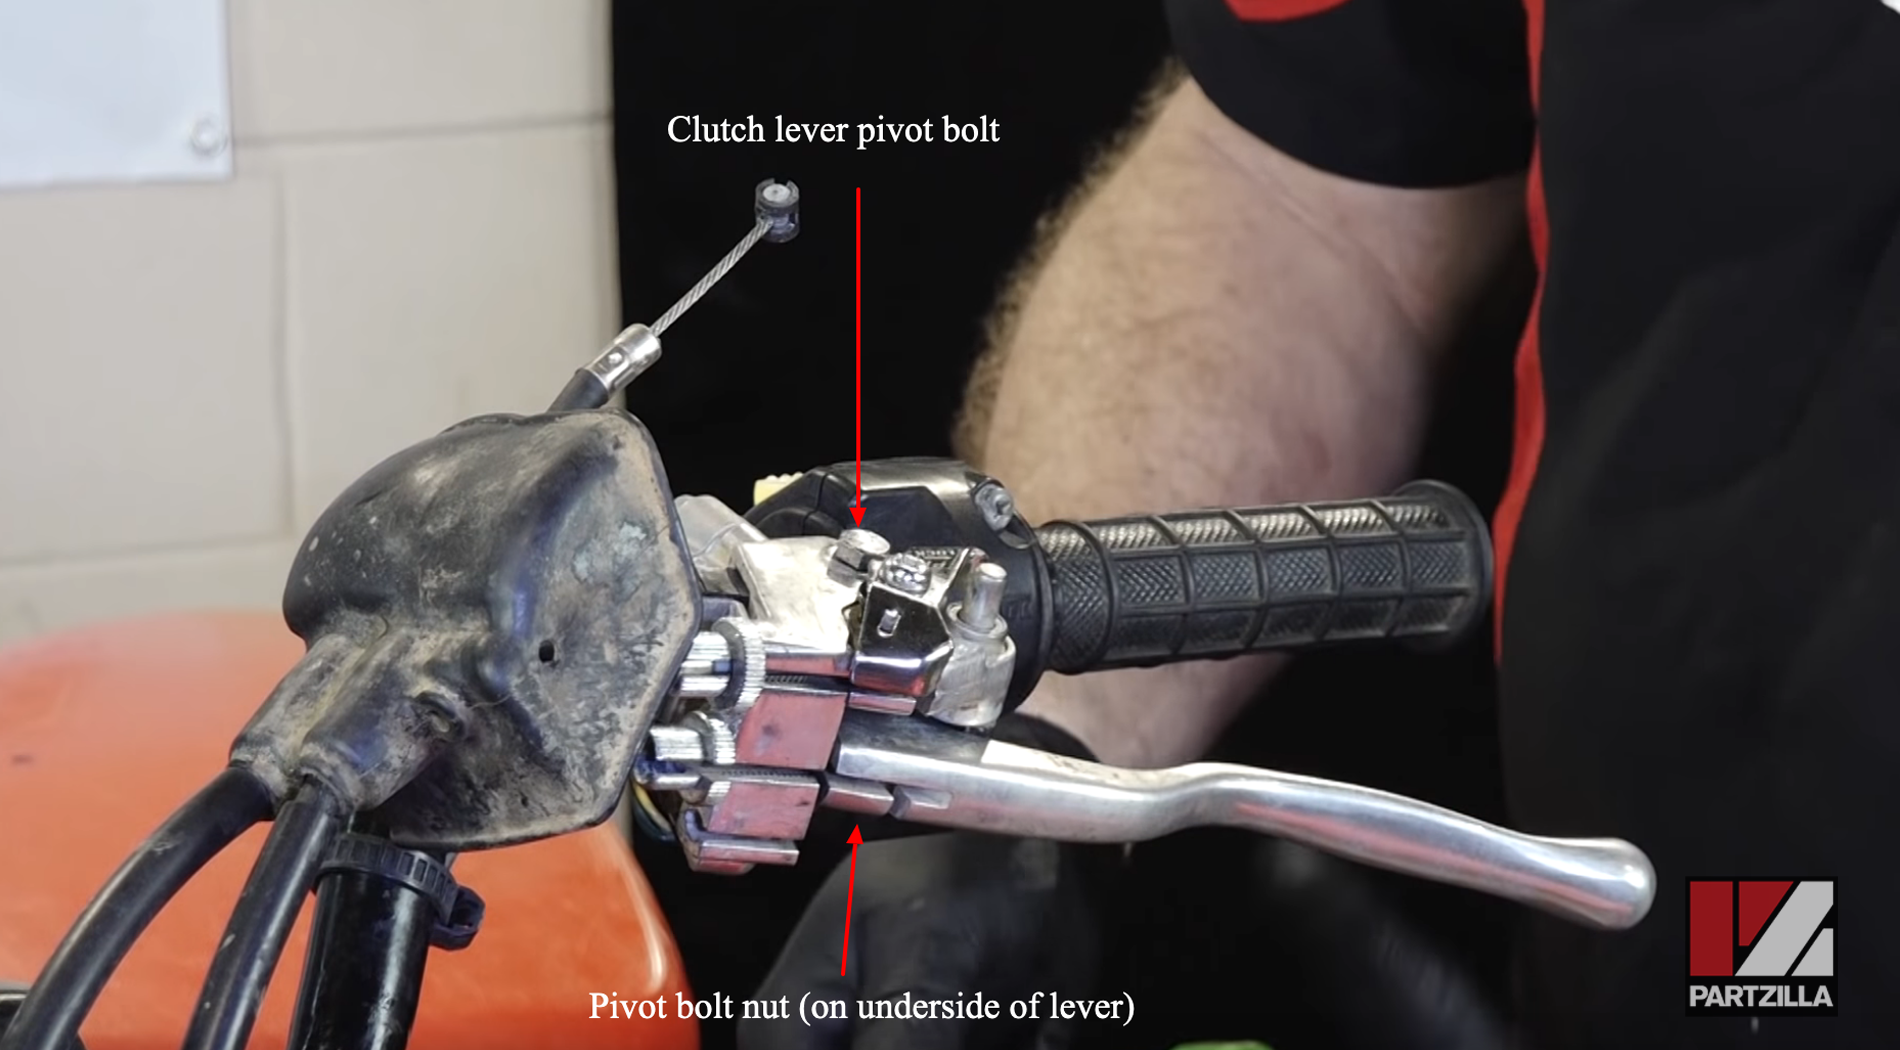 Honda TRX 400 ATV clutch lever replacement